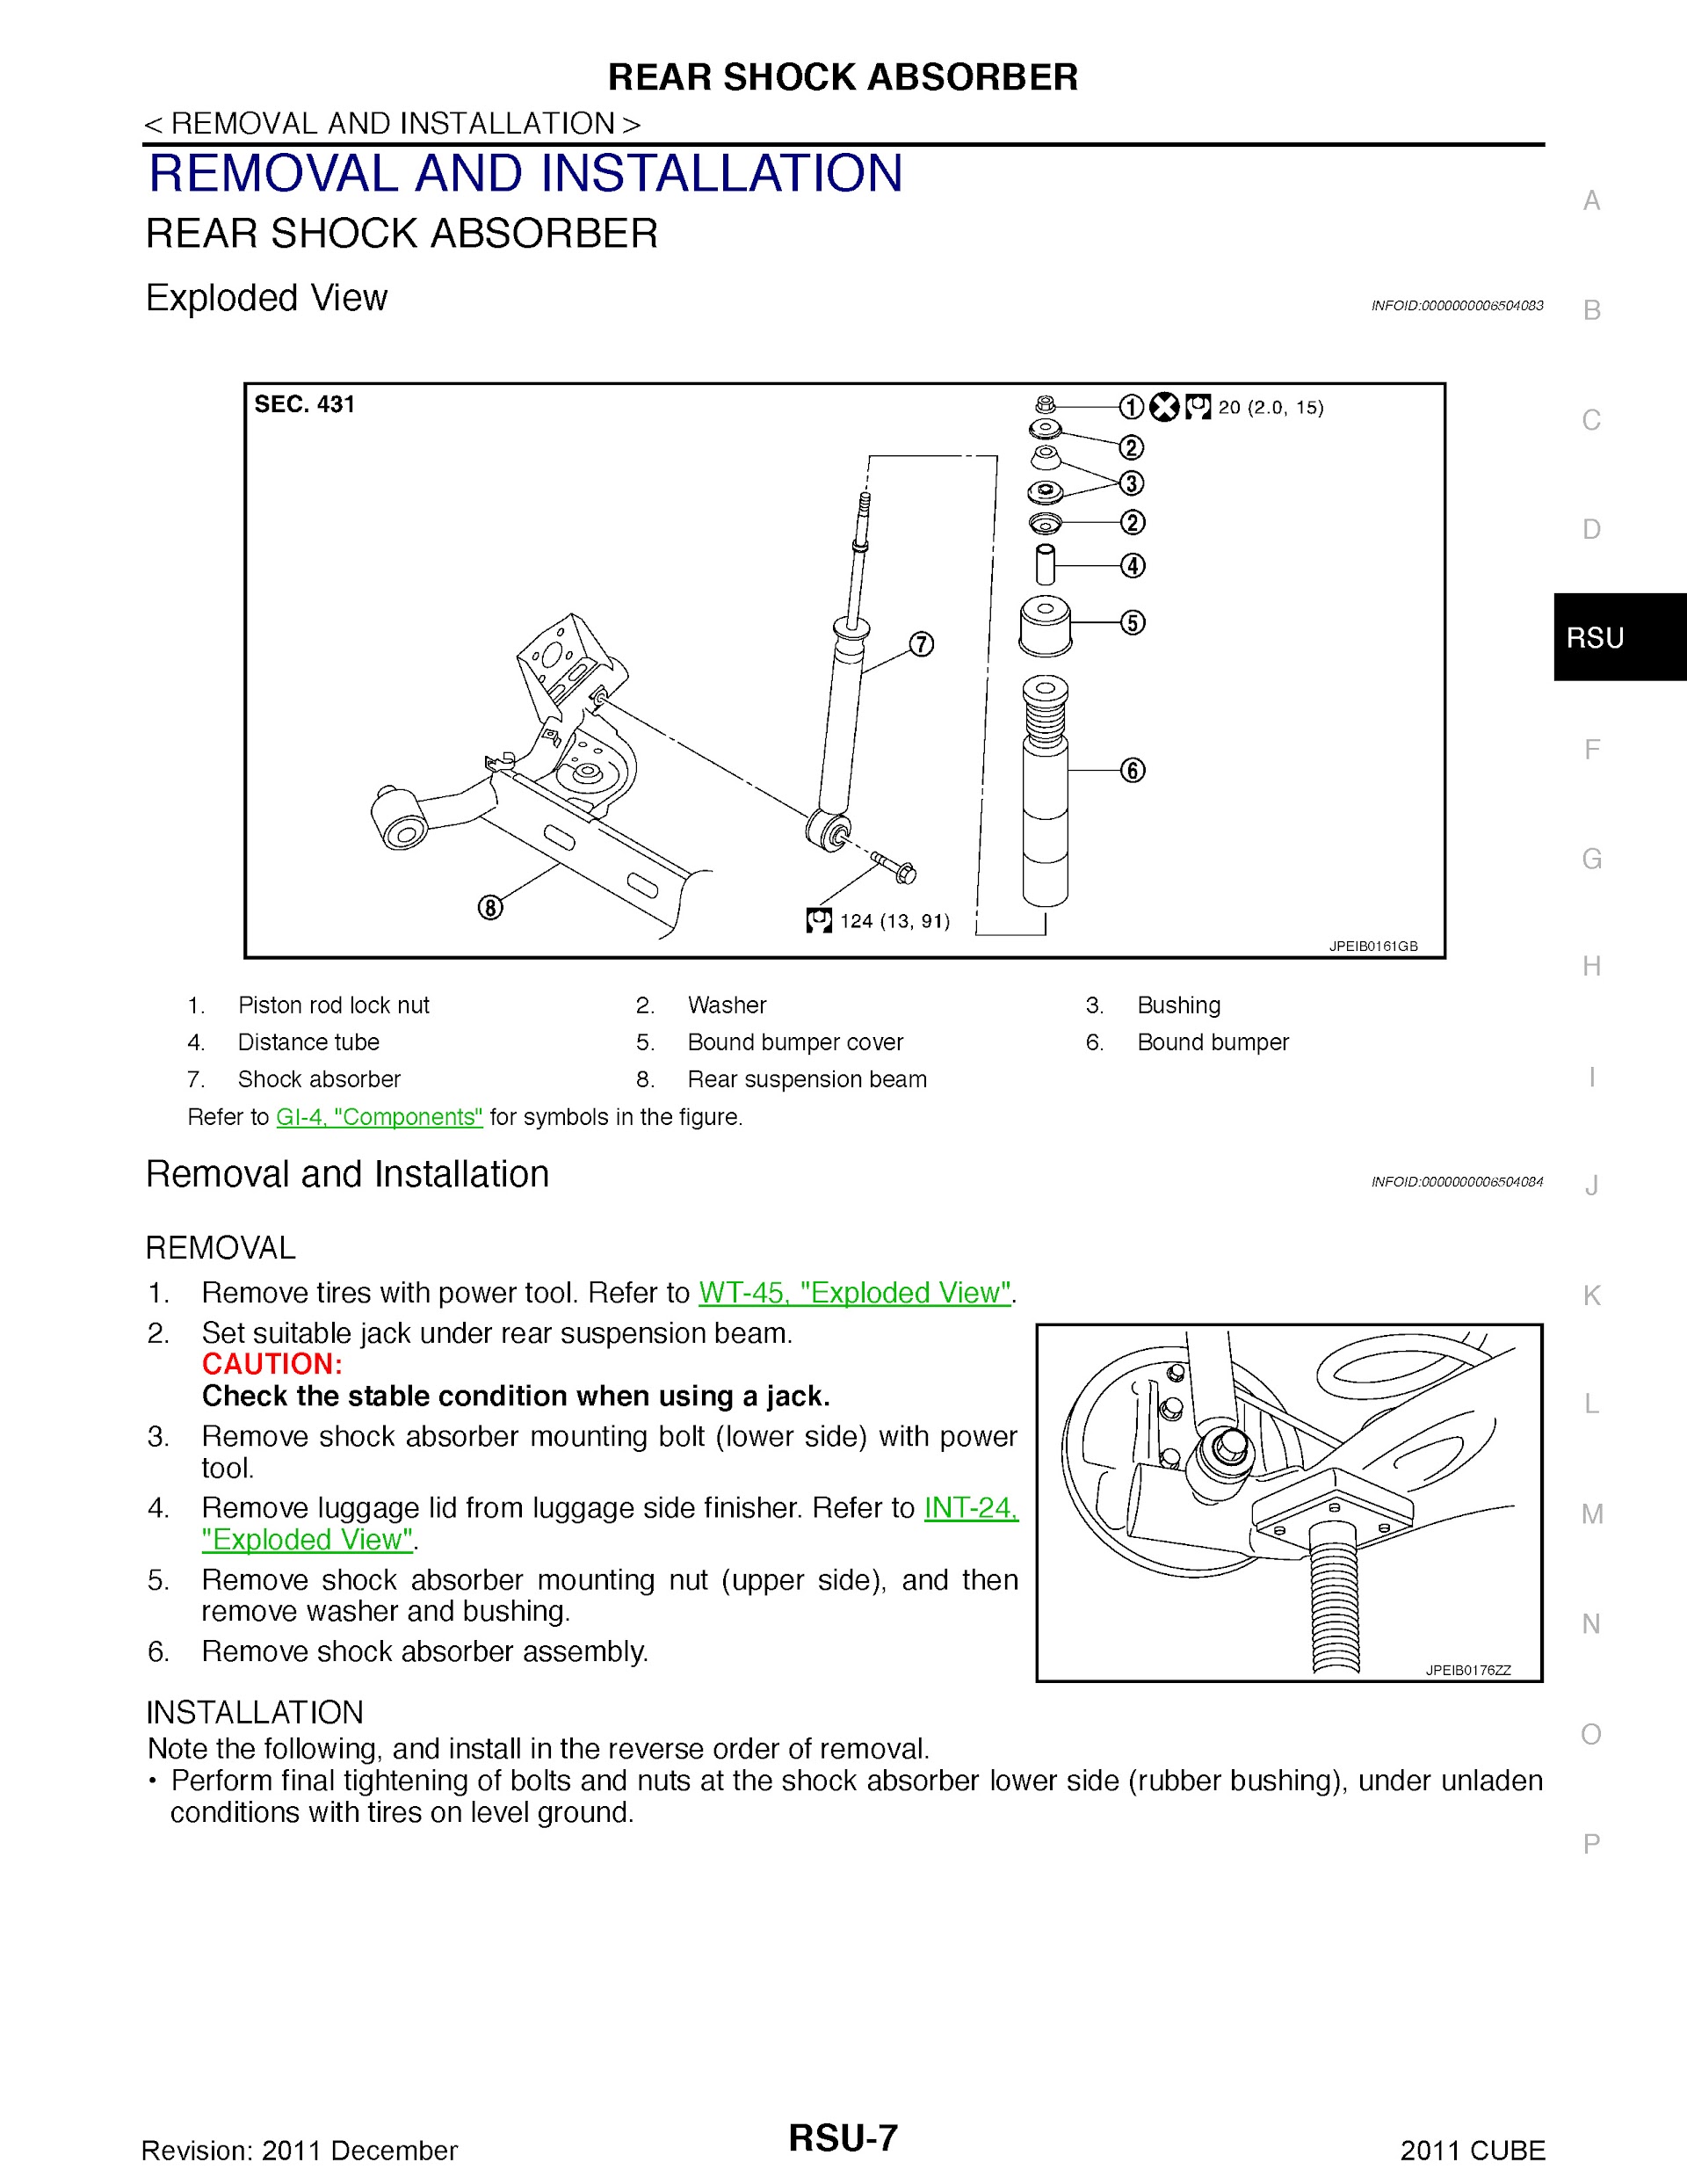 2011 Nissan Cube Repair Manual.